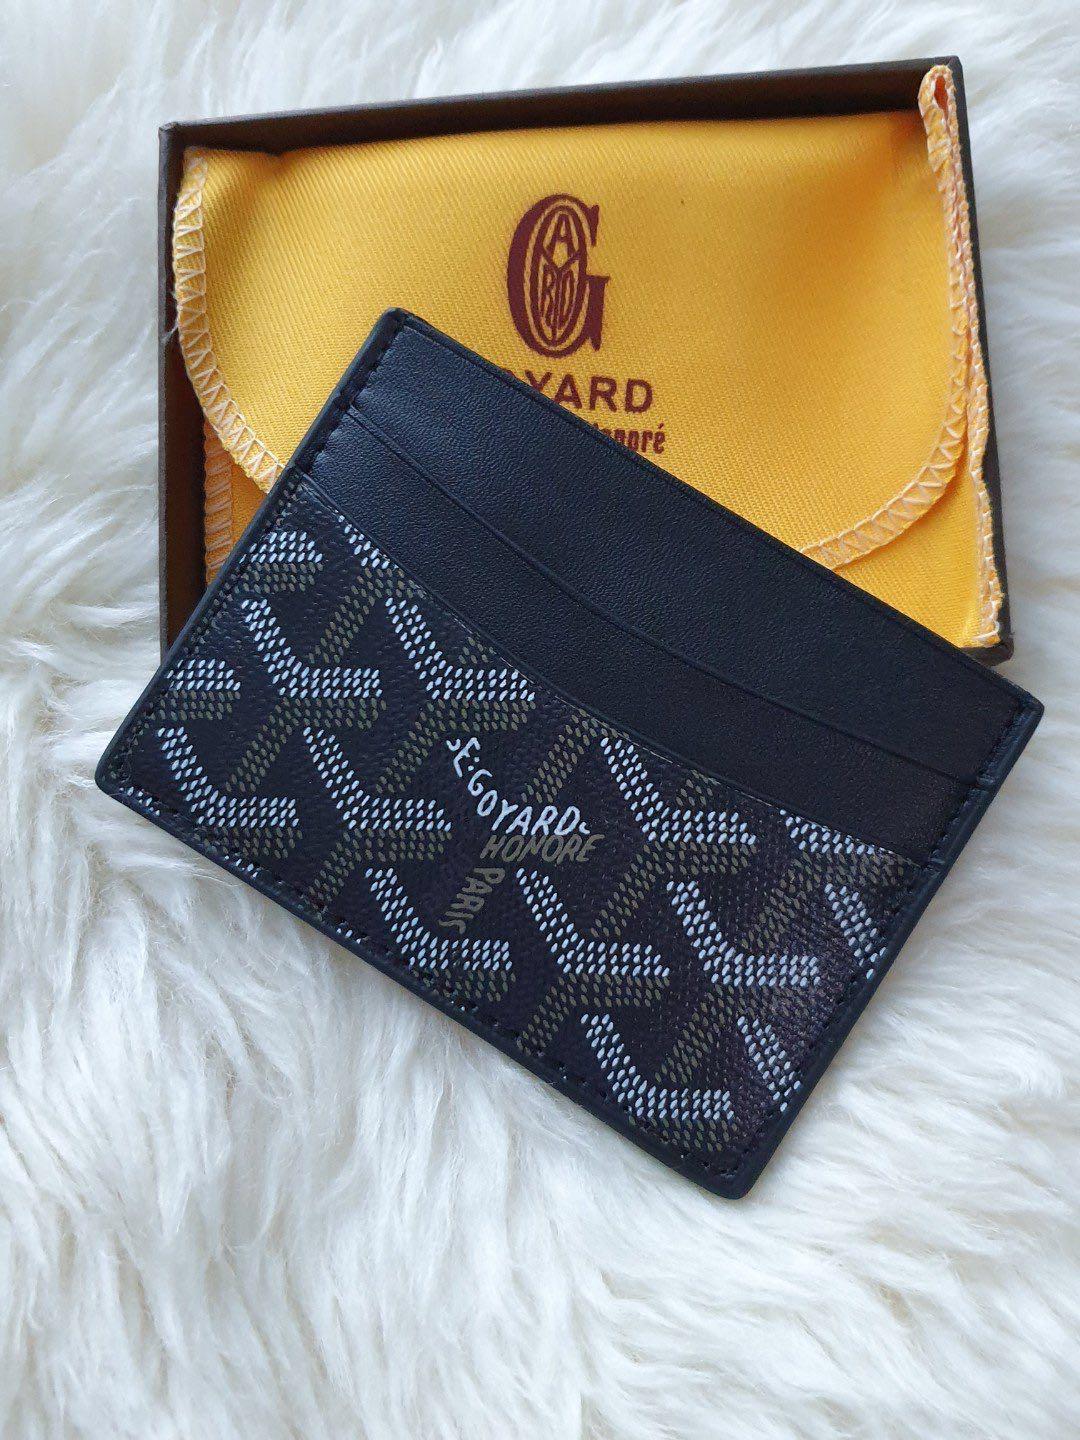 goyard leather wallet